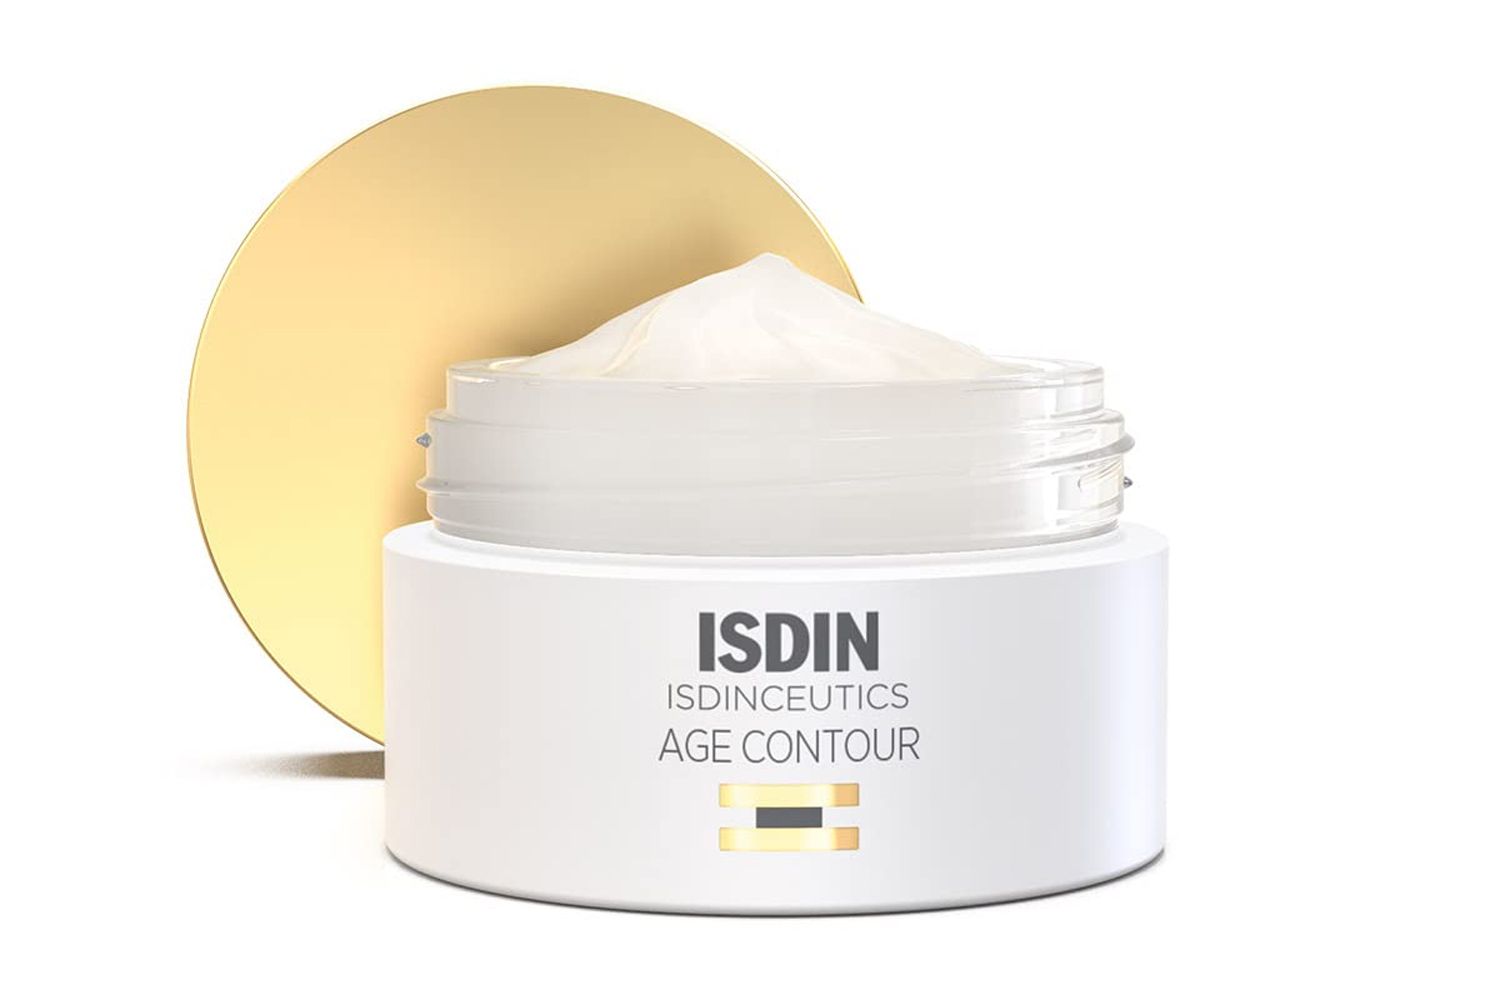 Amazon ISDIN ISDINCEUTICS Age Contour Firming and Rejuvenating Cream